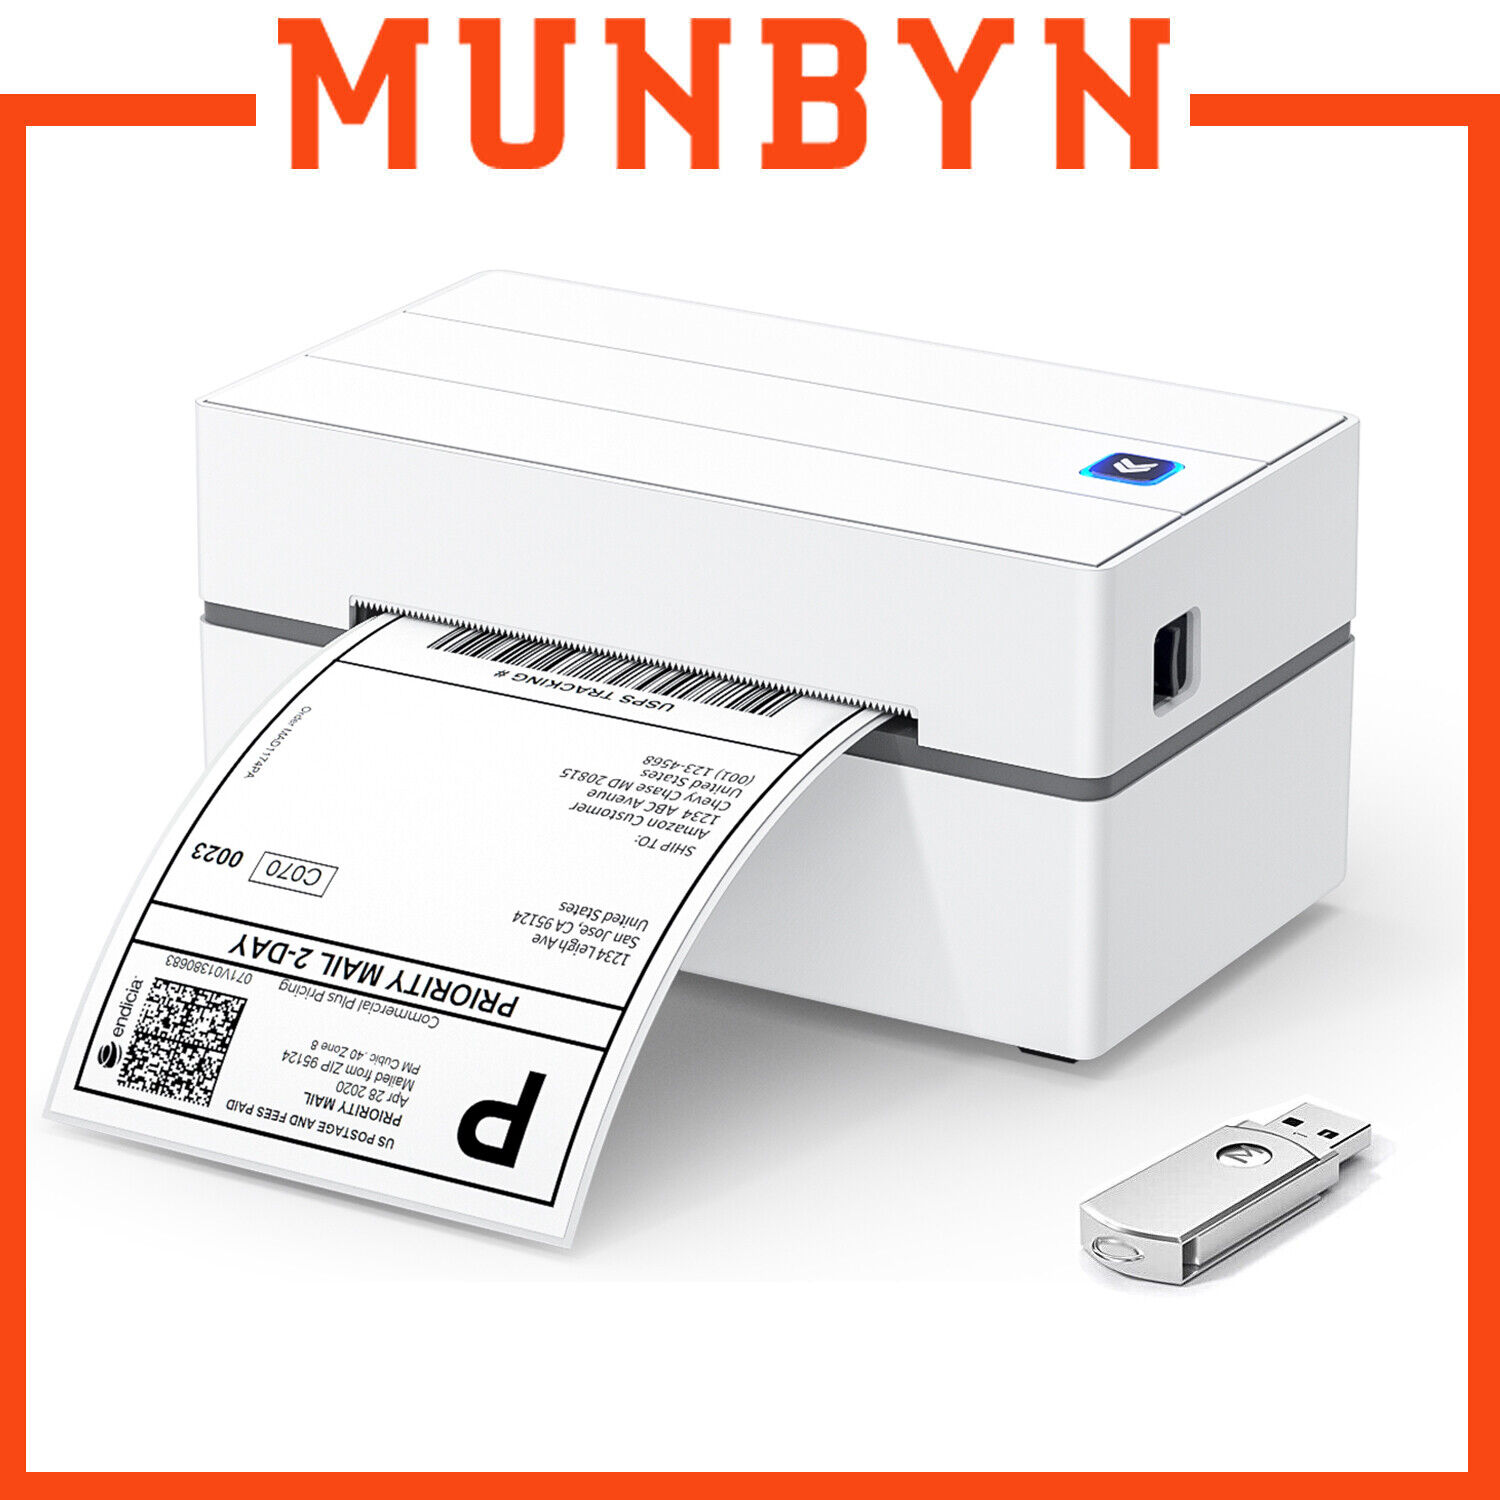 MUNBYN 4x6 Shipping Label Printer Thermal Barcode Desktop Printer w/ 500 Labels